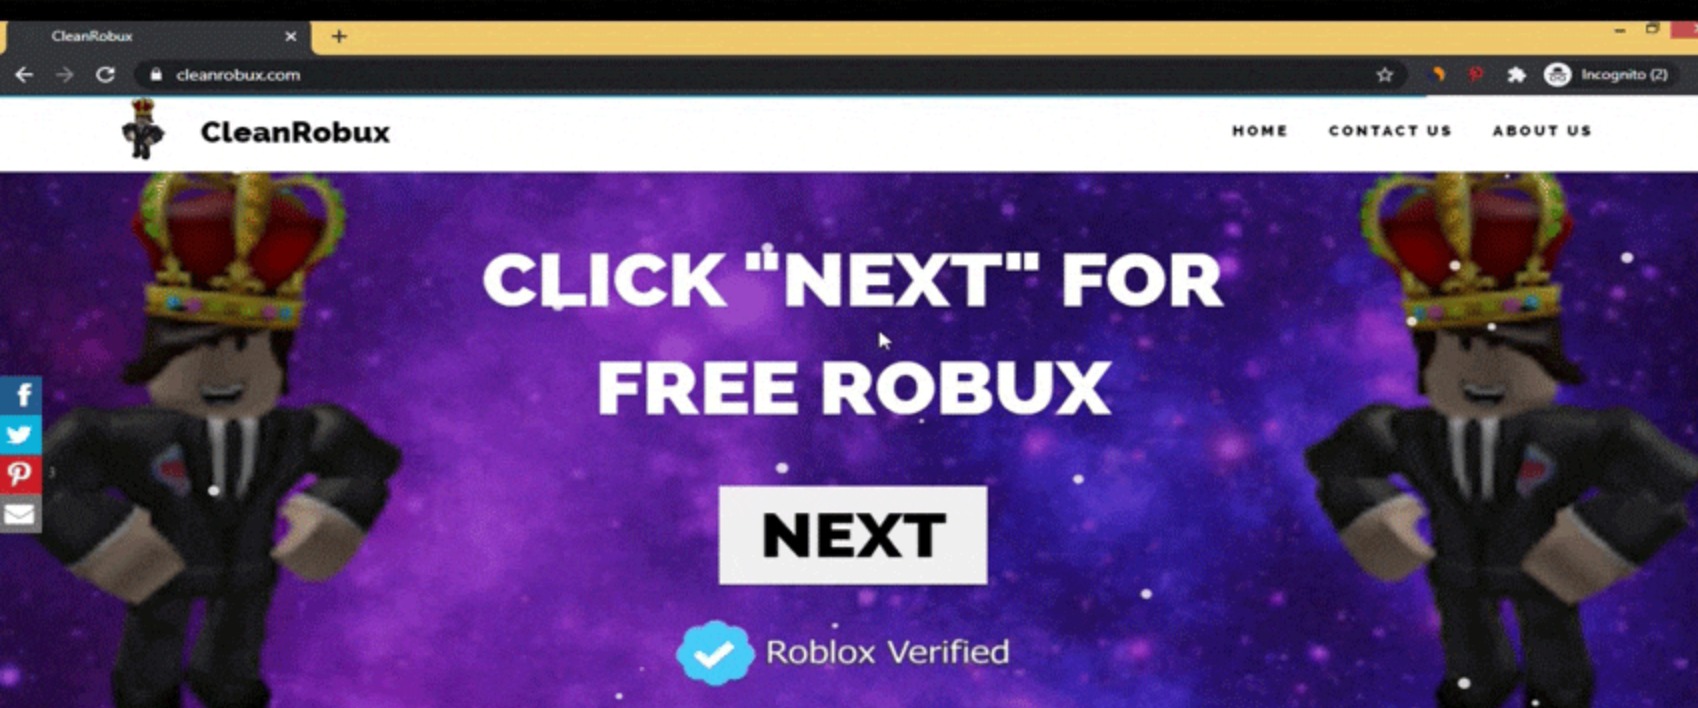 Cleanrobux Com Free Robux Is The Website Legit Ridzeal - robux site questionnaire